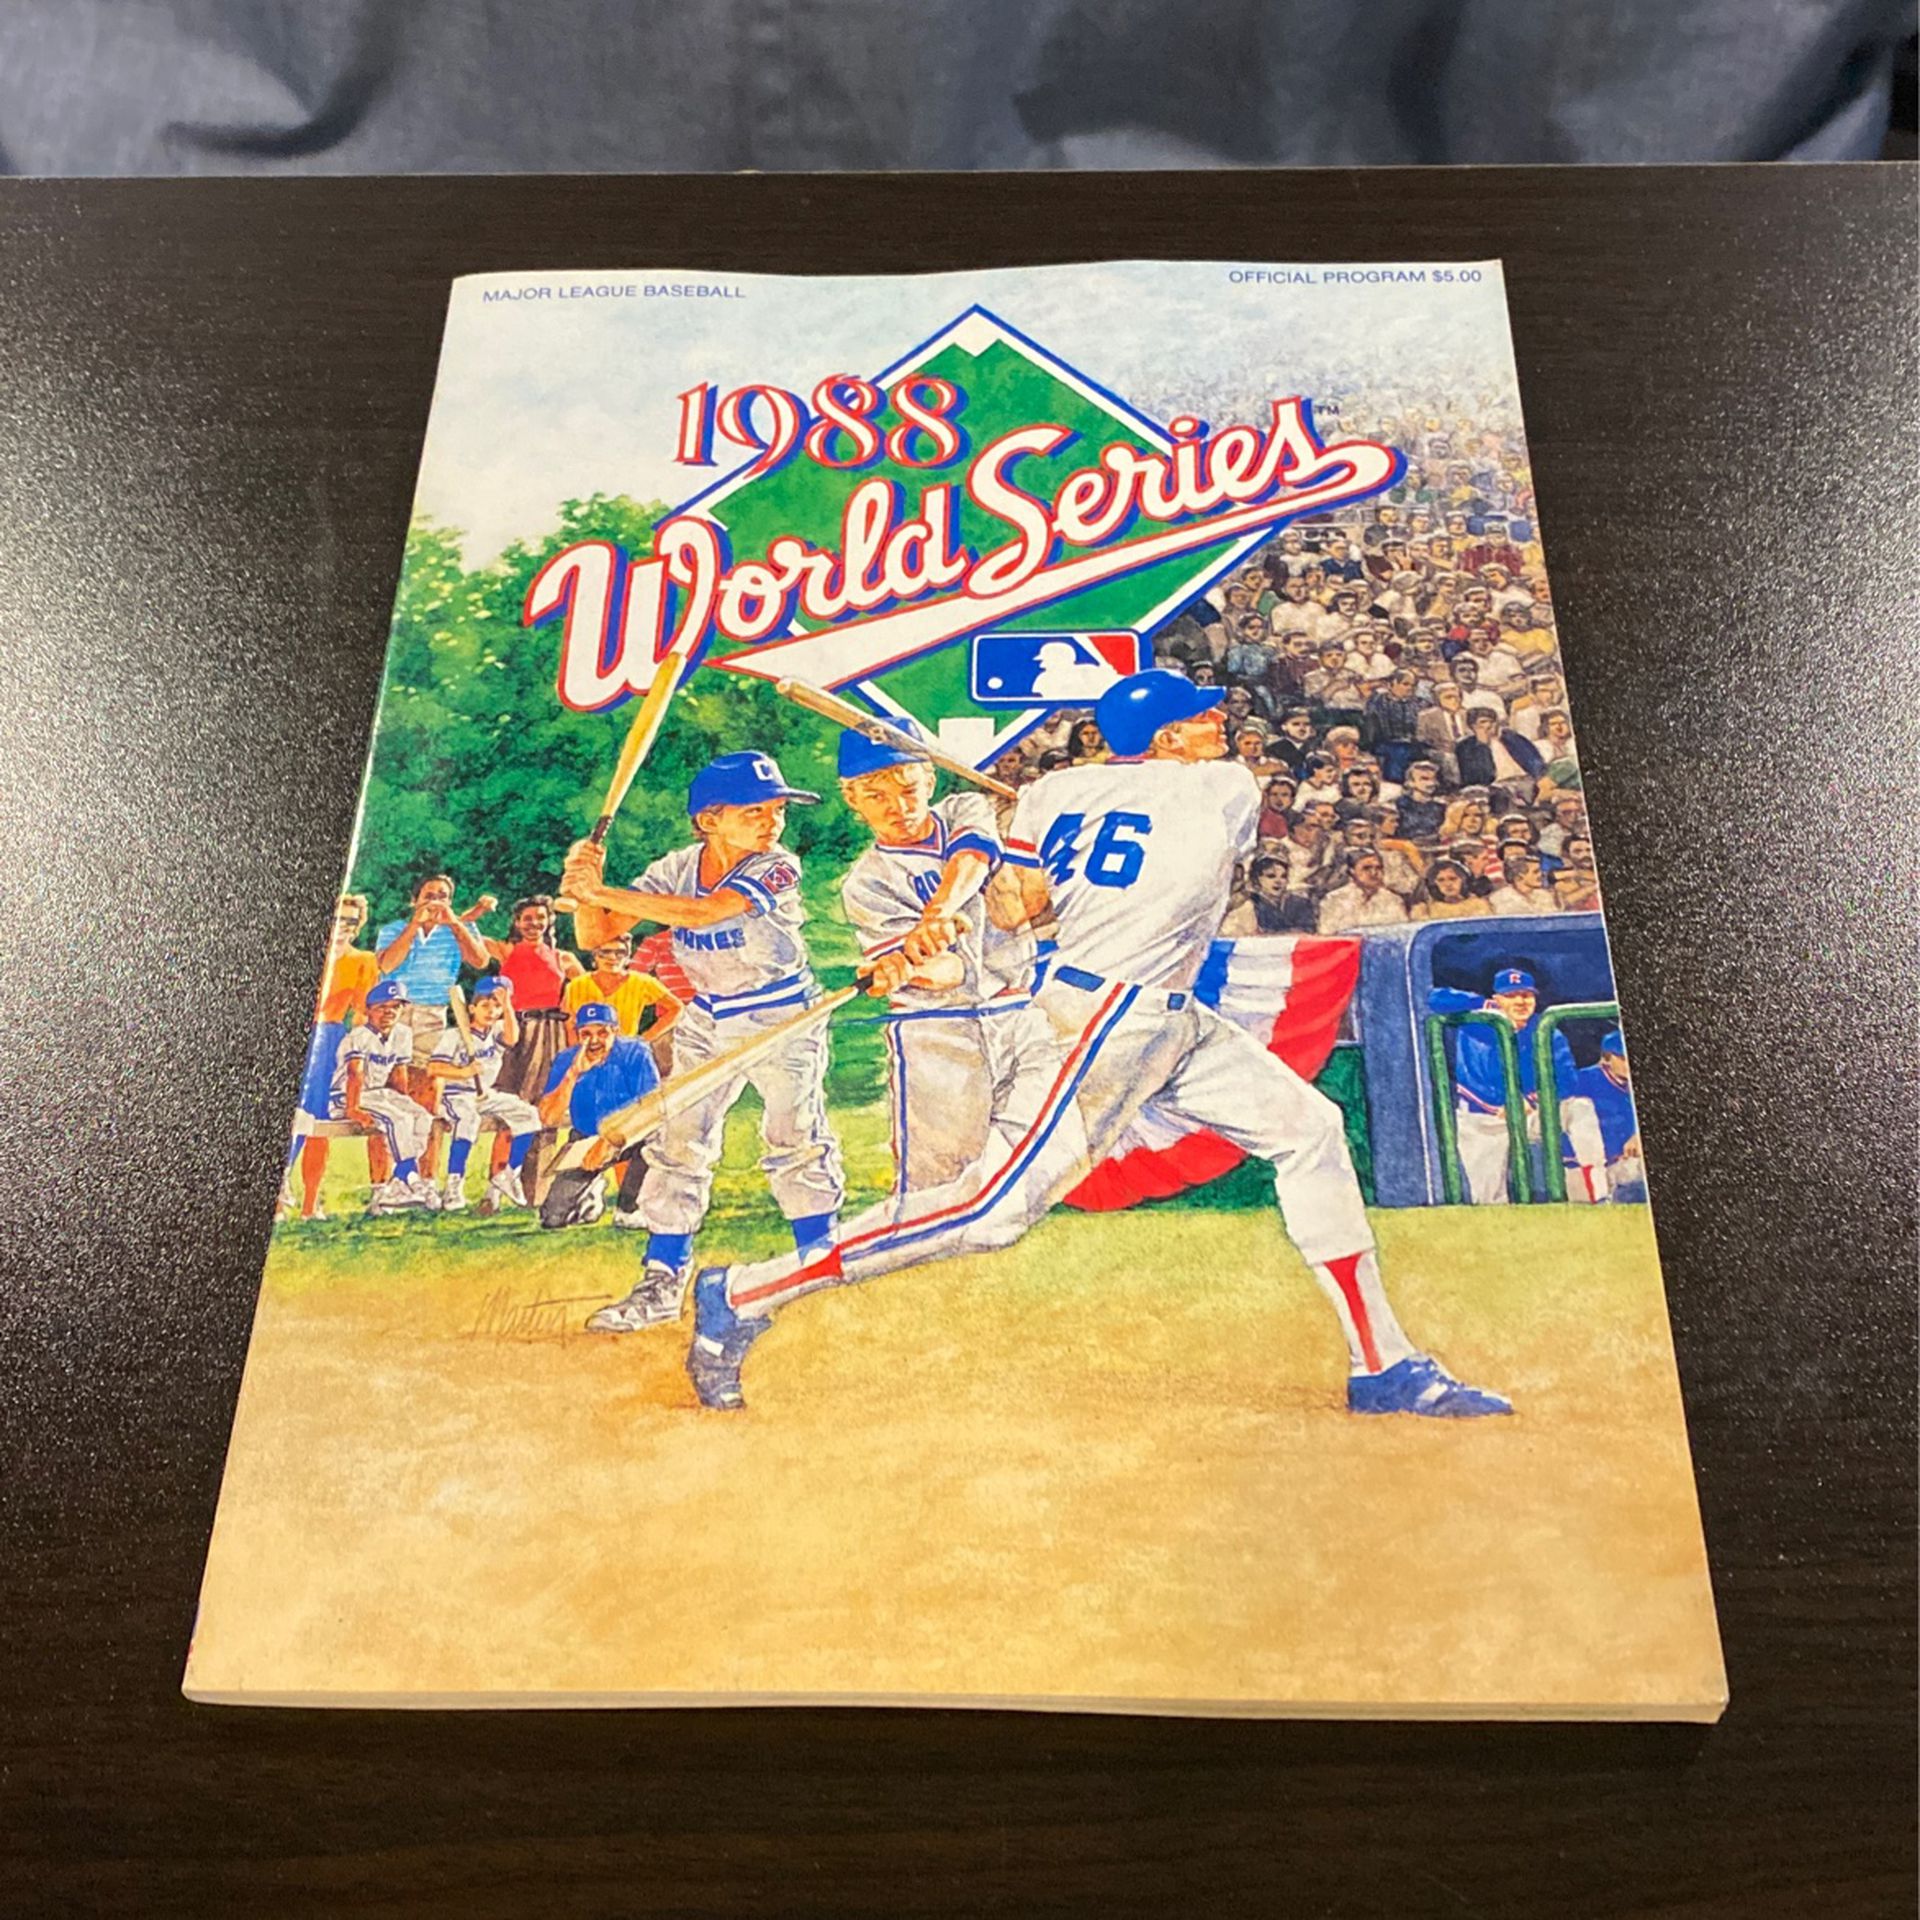 1988 World Series Official Program